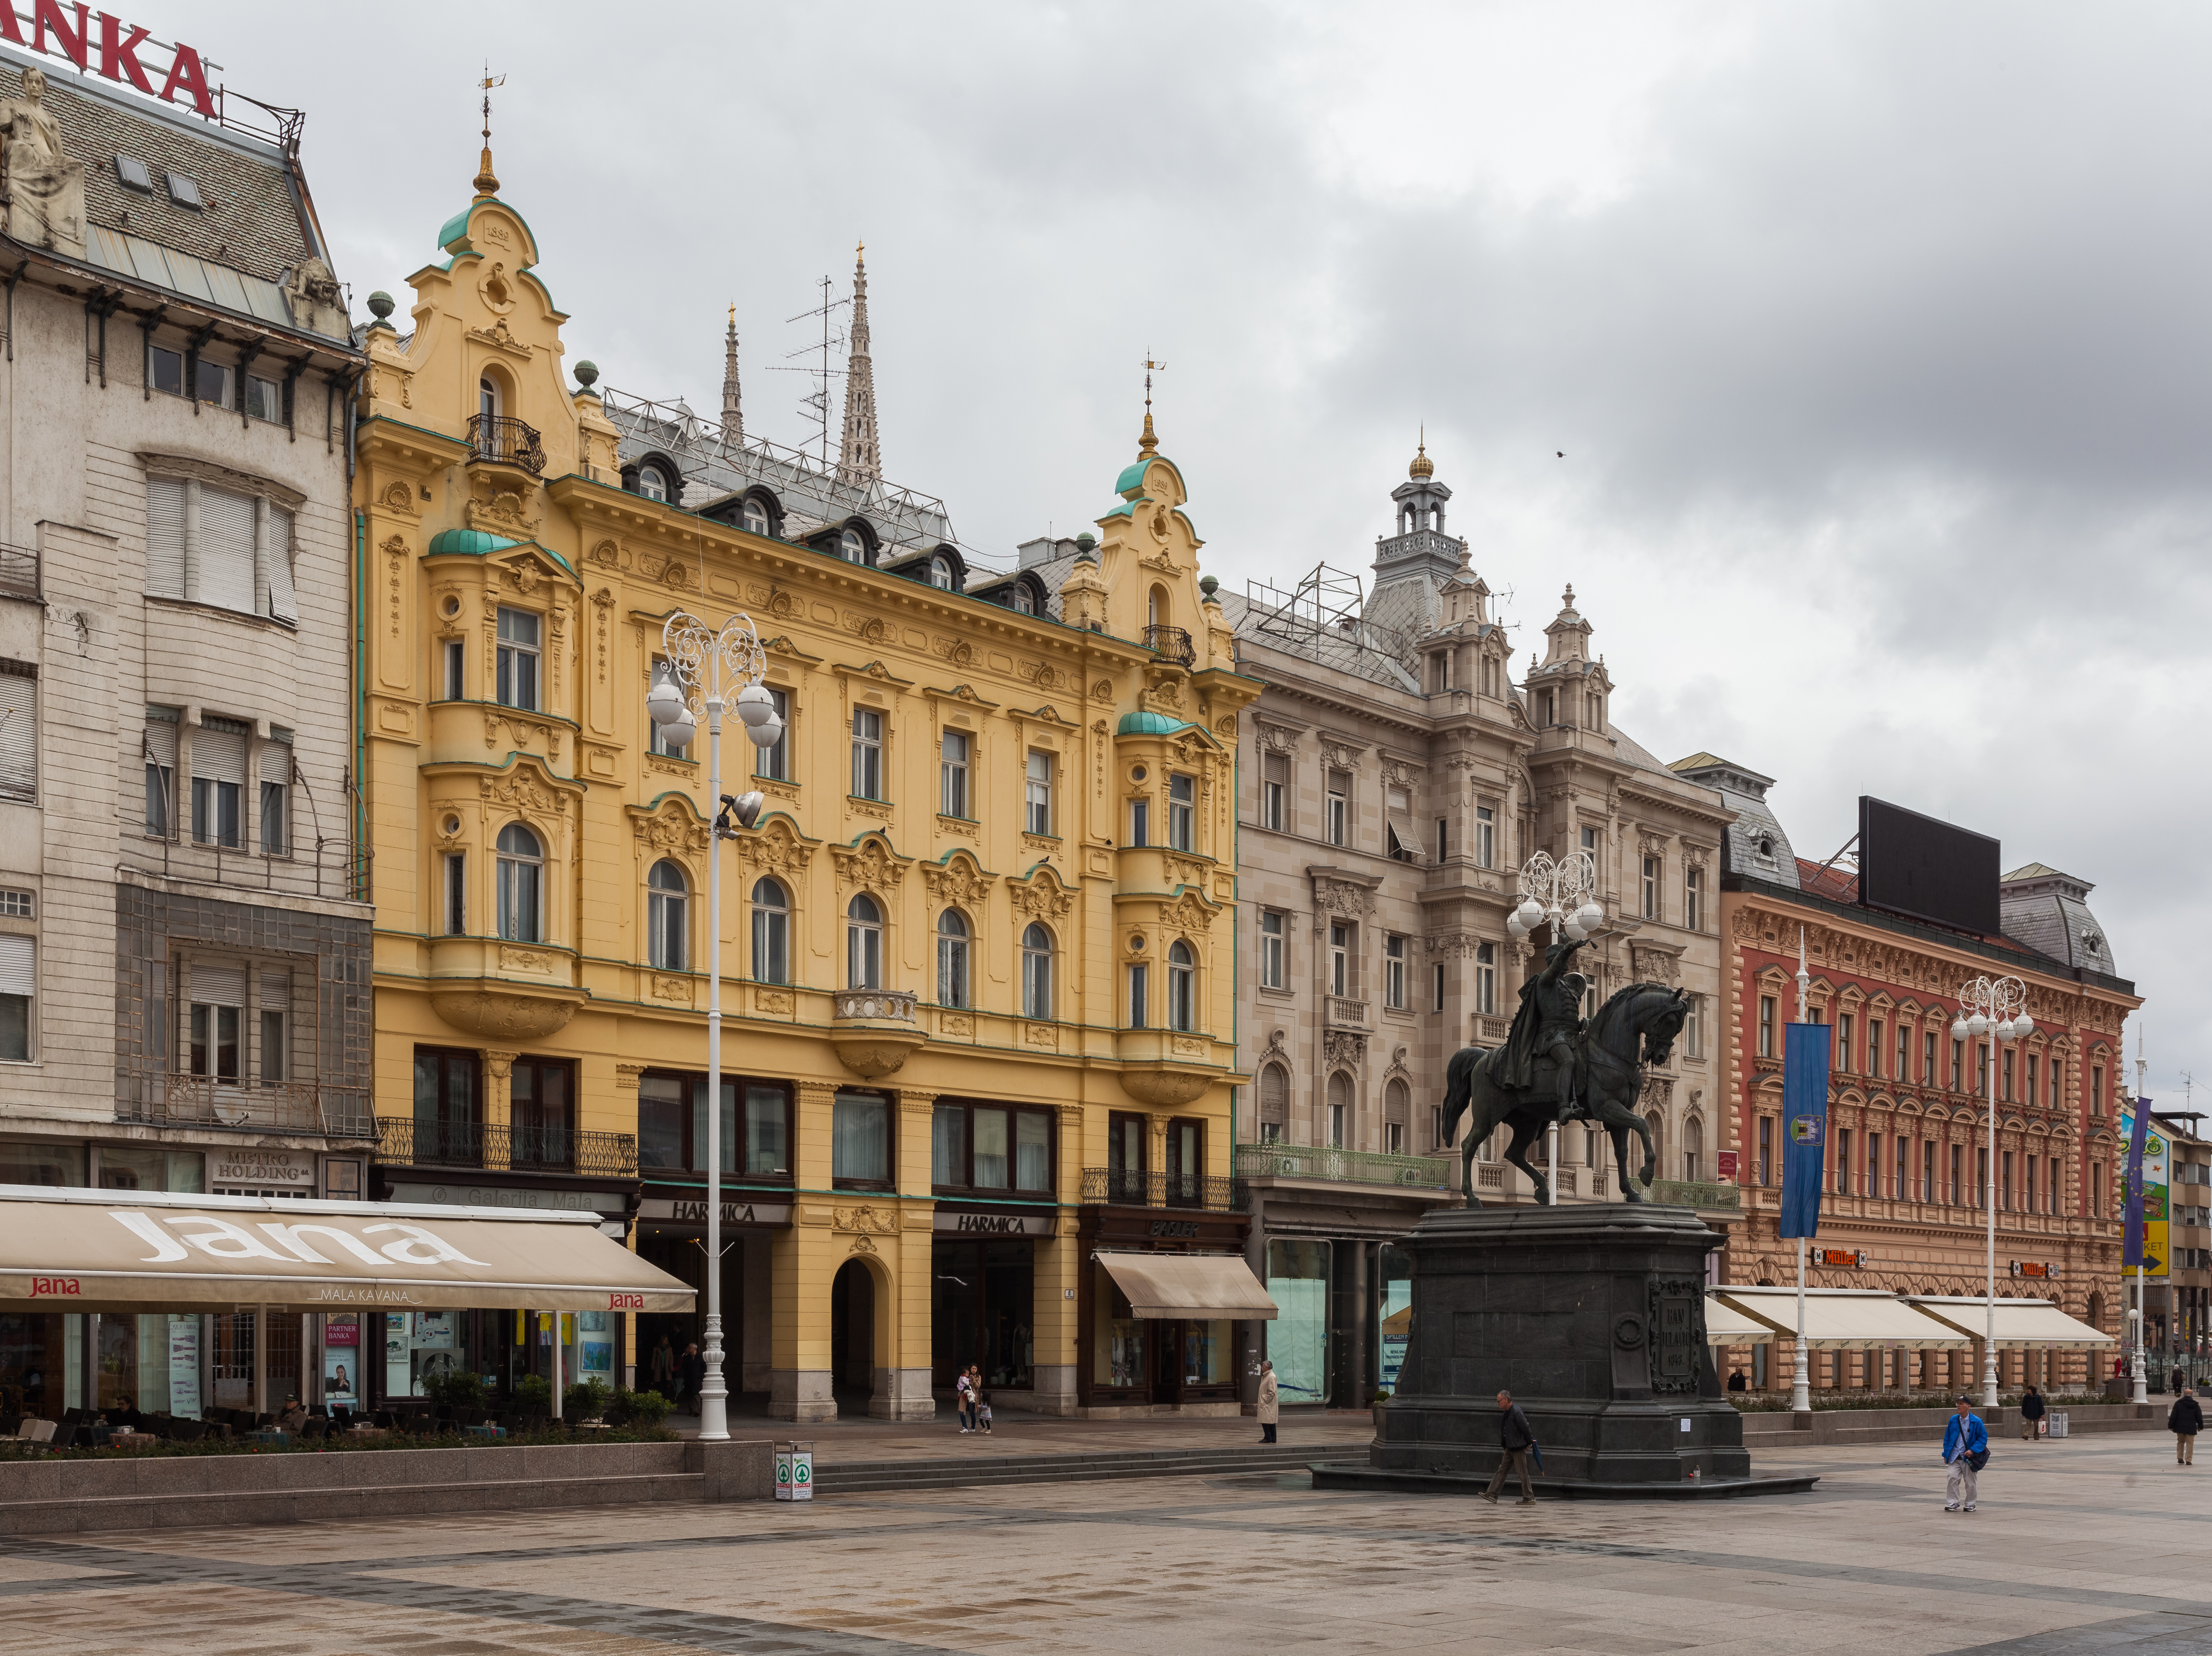 Estatua de Ban Jelacic, Zagreb, Croacia, 2014-04-20, DD 03